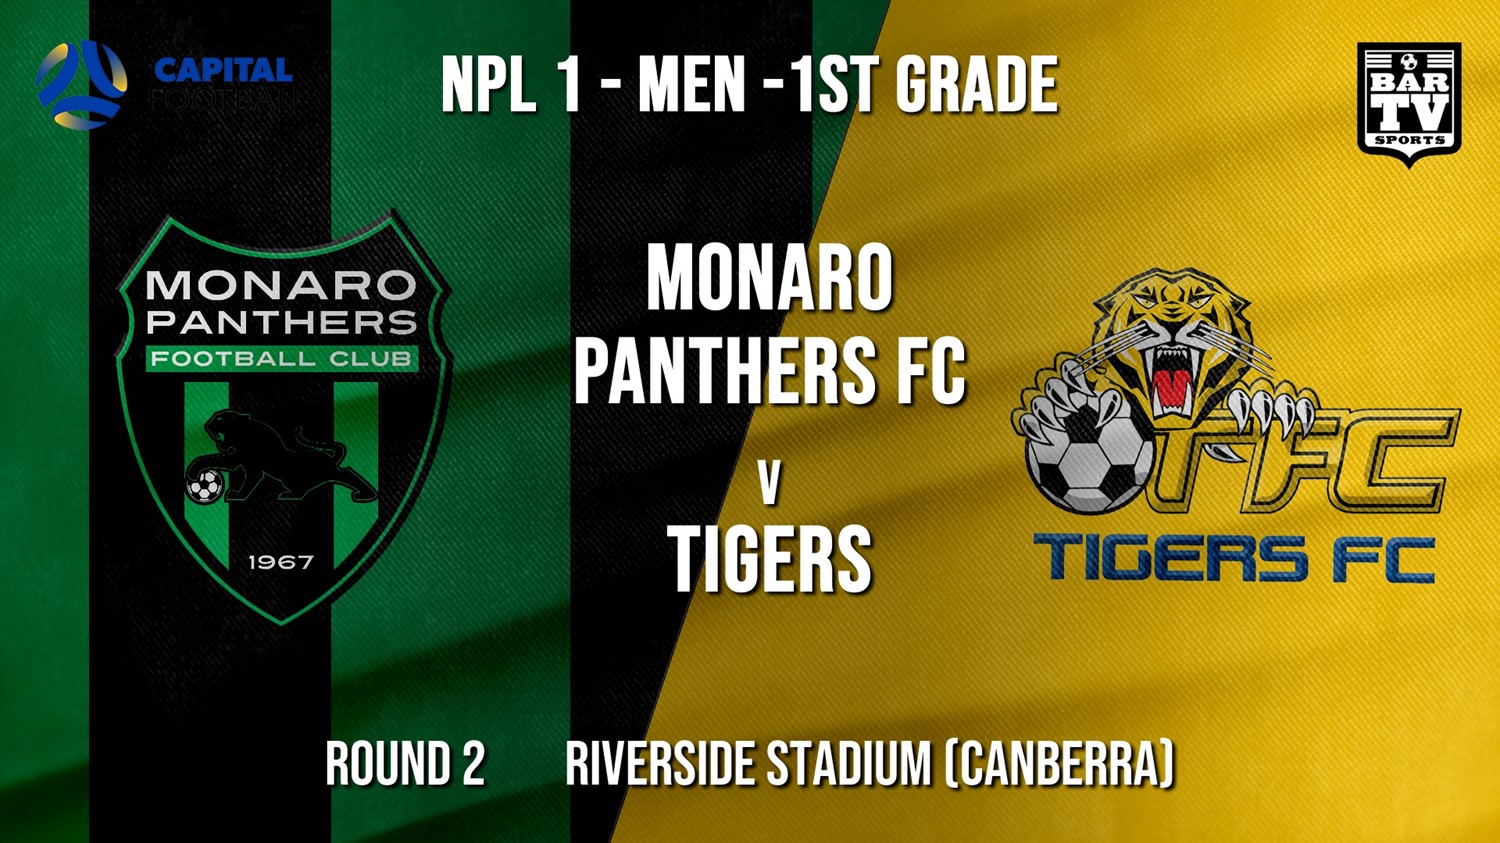 NPL - Capital Round 2 - Monaro Panthers FC v Tigers FC Minigame Slate Image